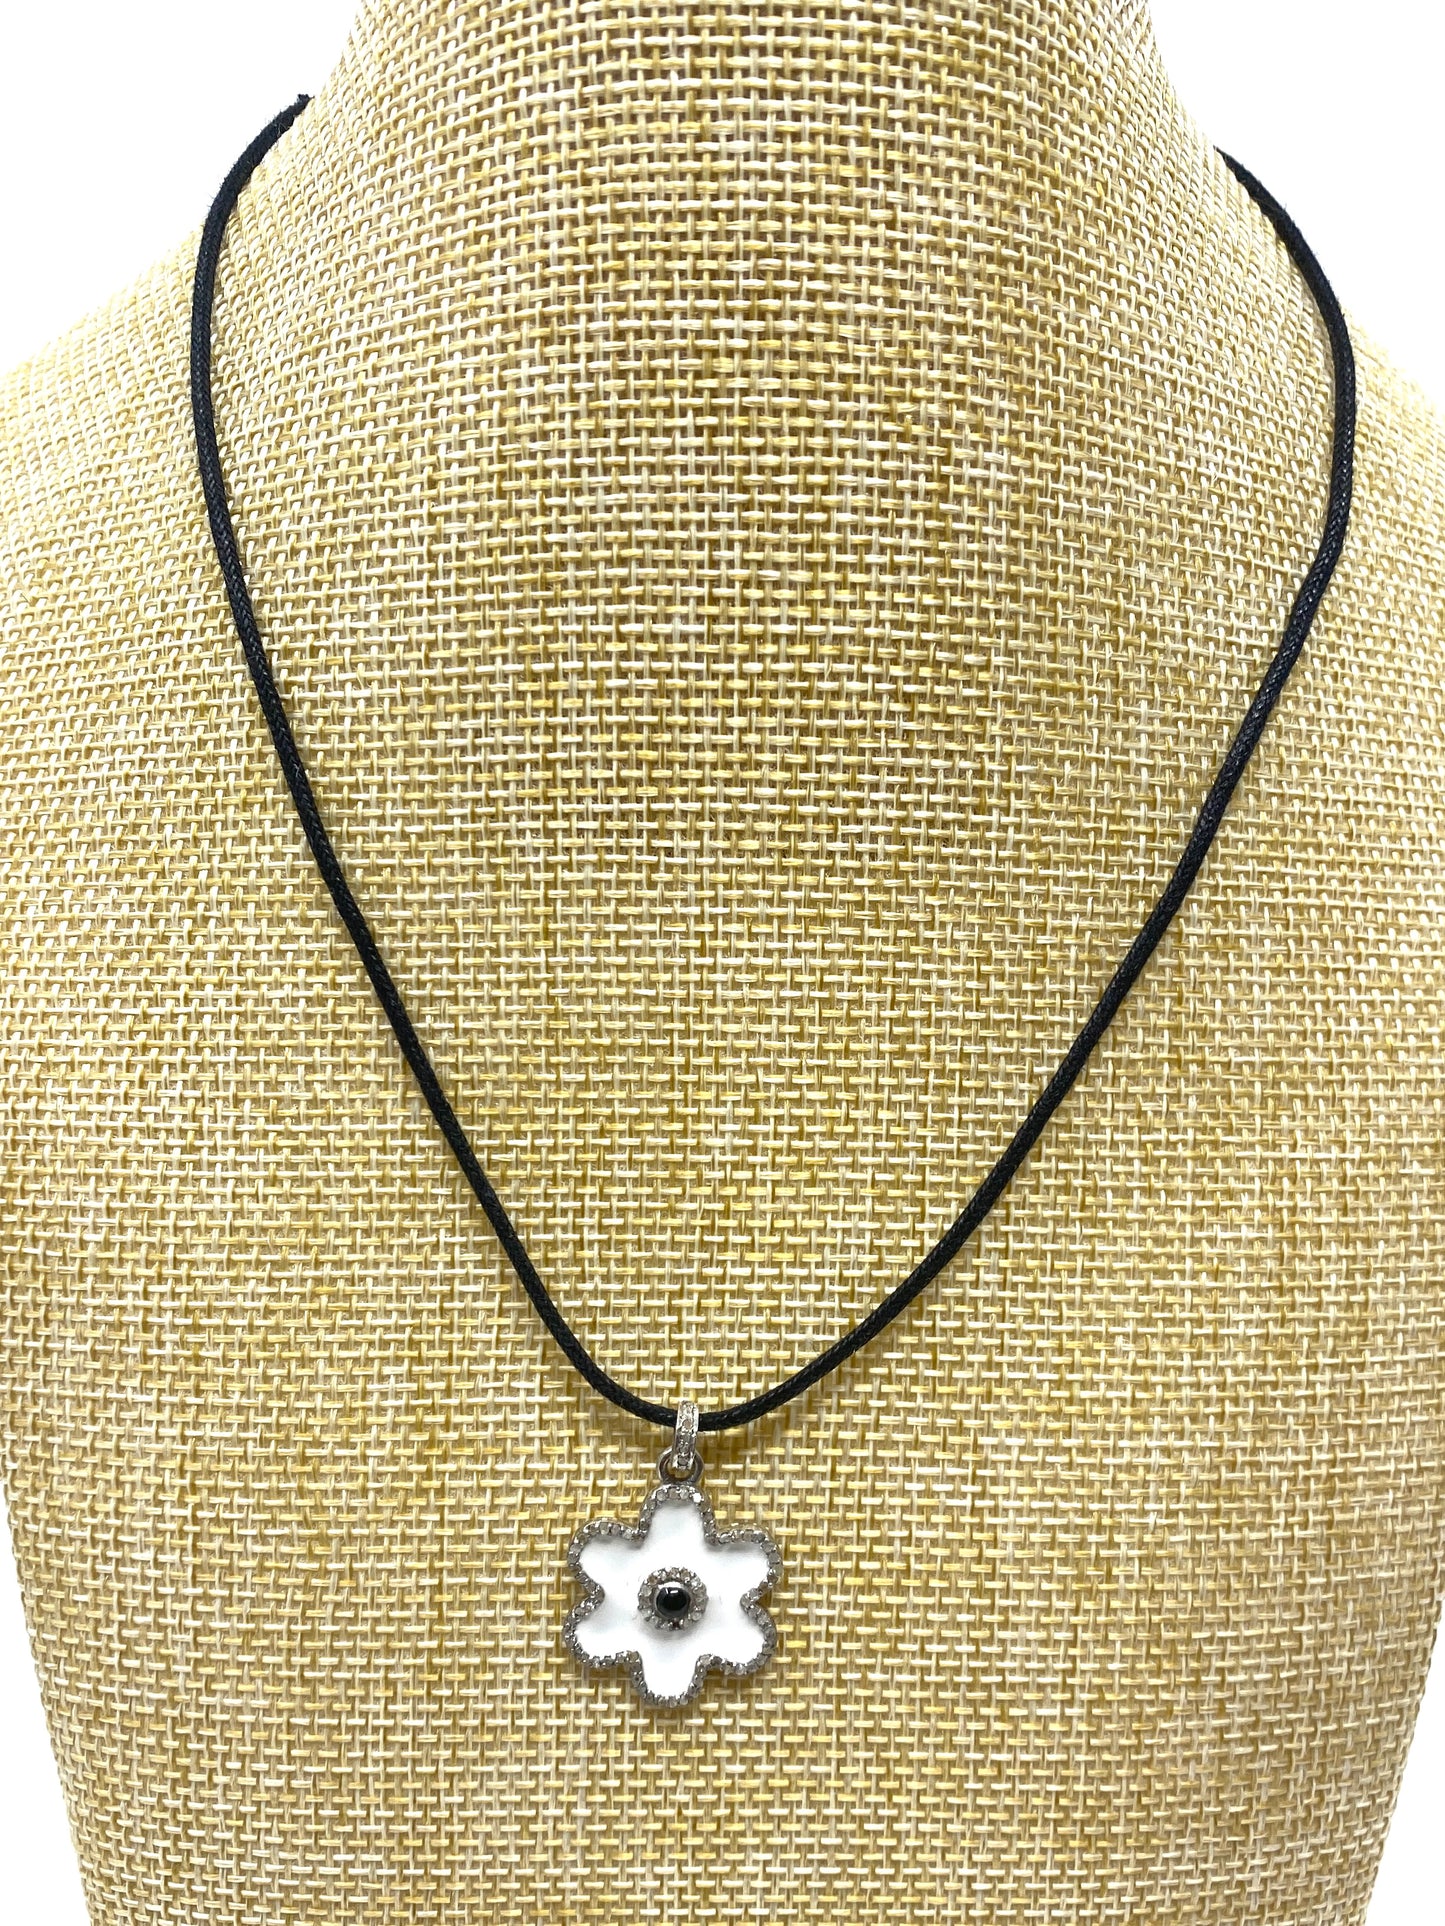 White Enamel and Diamond Flower Pendant on Black Cord Necklace